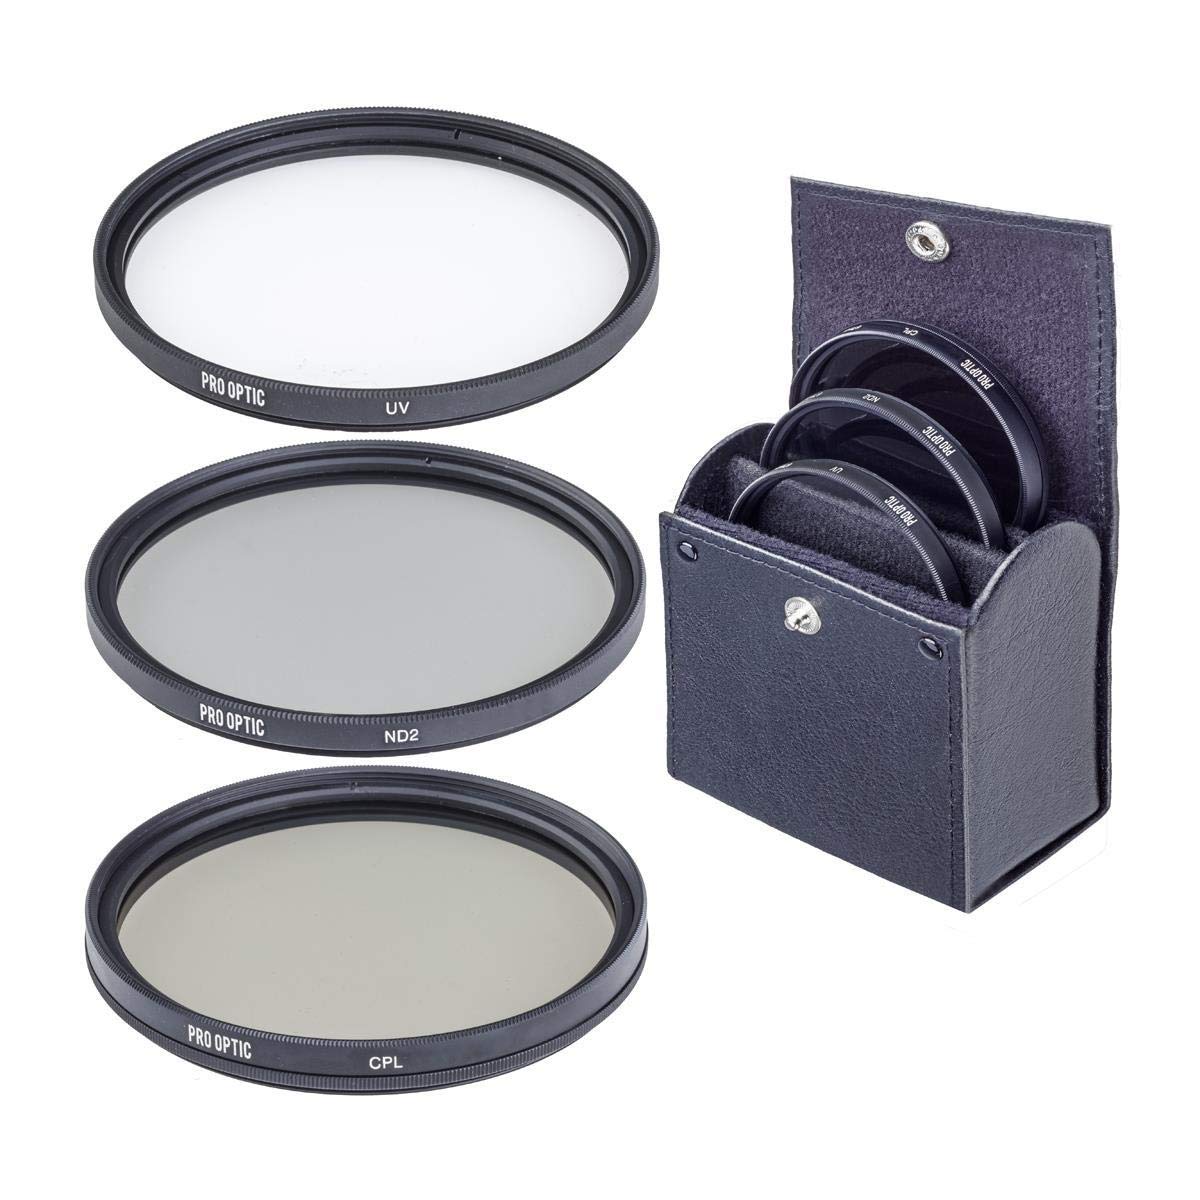 Panasonic Lumix G95 Mirrorless Digital Camera with Lumix G Vario 12-60mm f/3.5-5.6 MFT Lens Bundle with 64GB Memory Card, Shoulder Bag, 58mm Filter Kit, Cleaning Kit